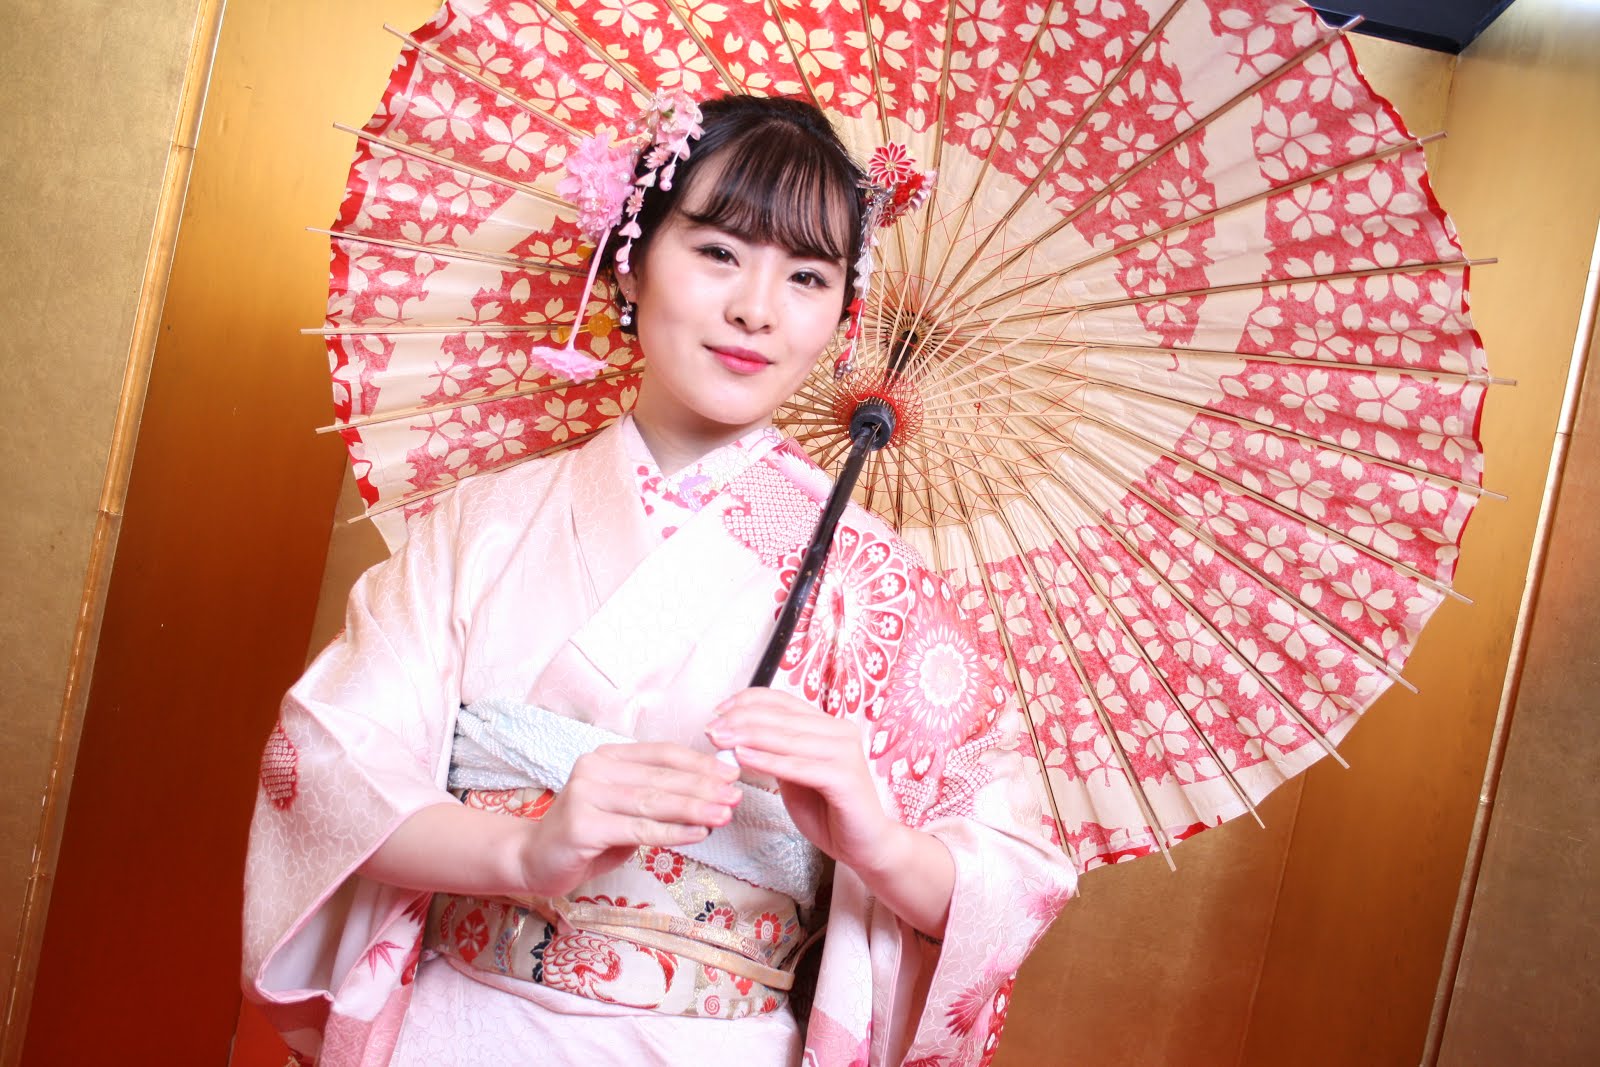 Explore Japan like Japanese in Kimono - Stevie Wong